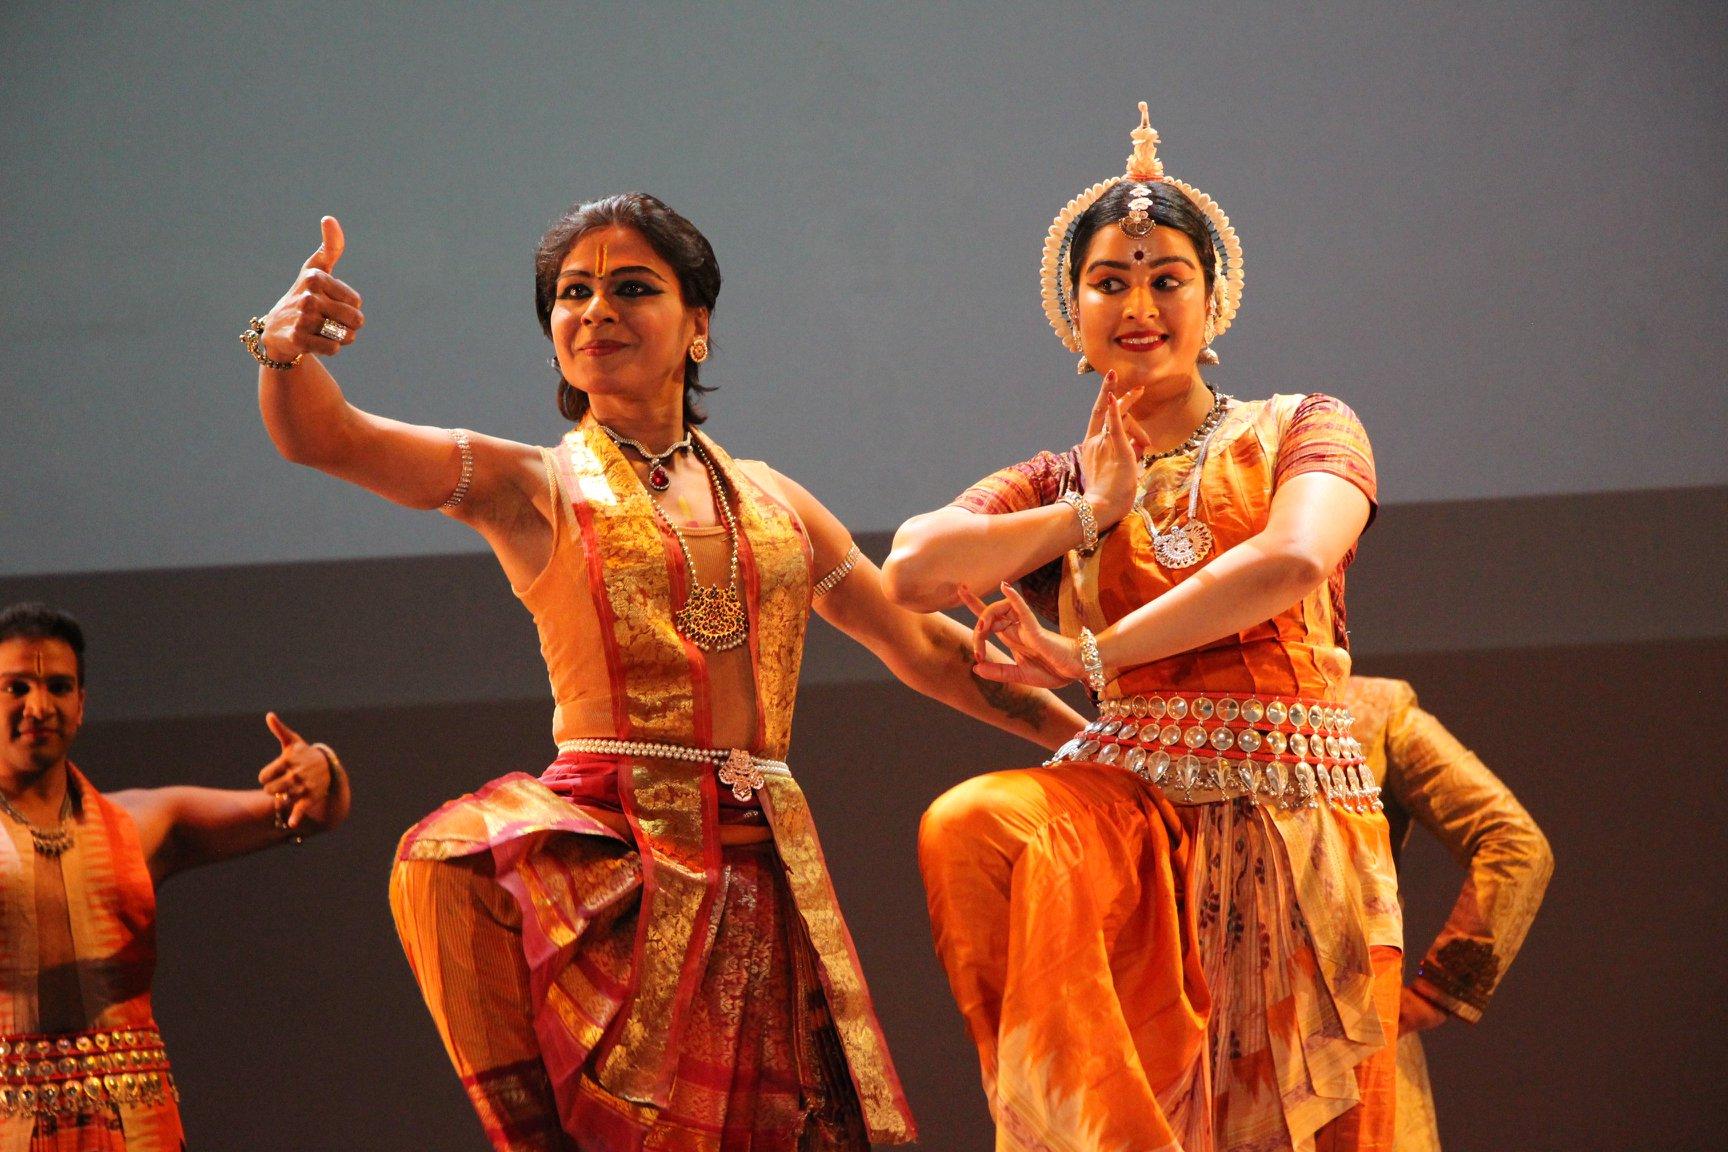 Laksha Dantran and Misha Talapatra perform. (Photo by Monika Bahroos)